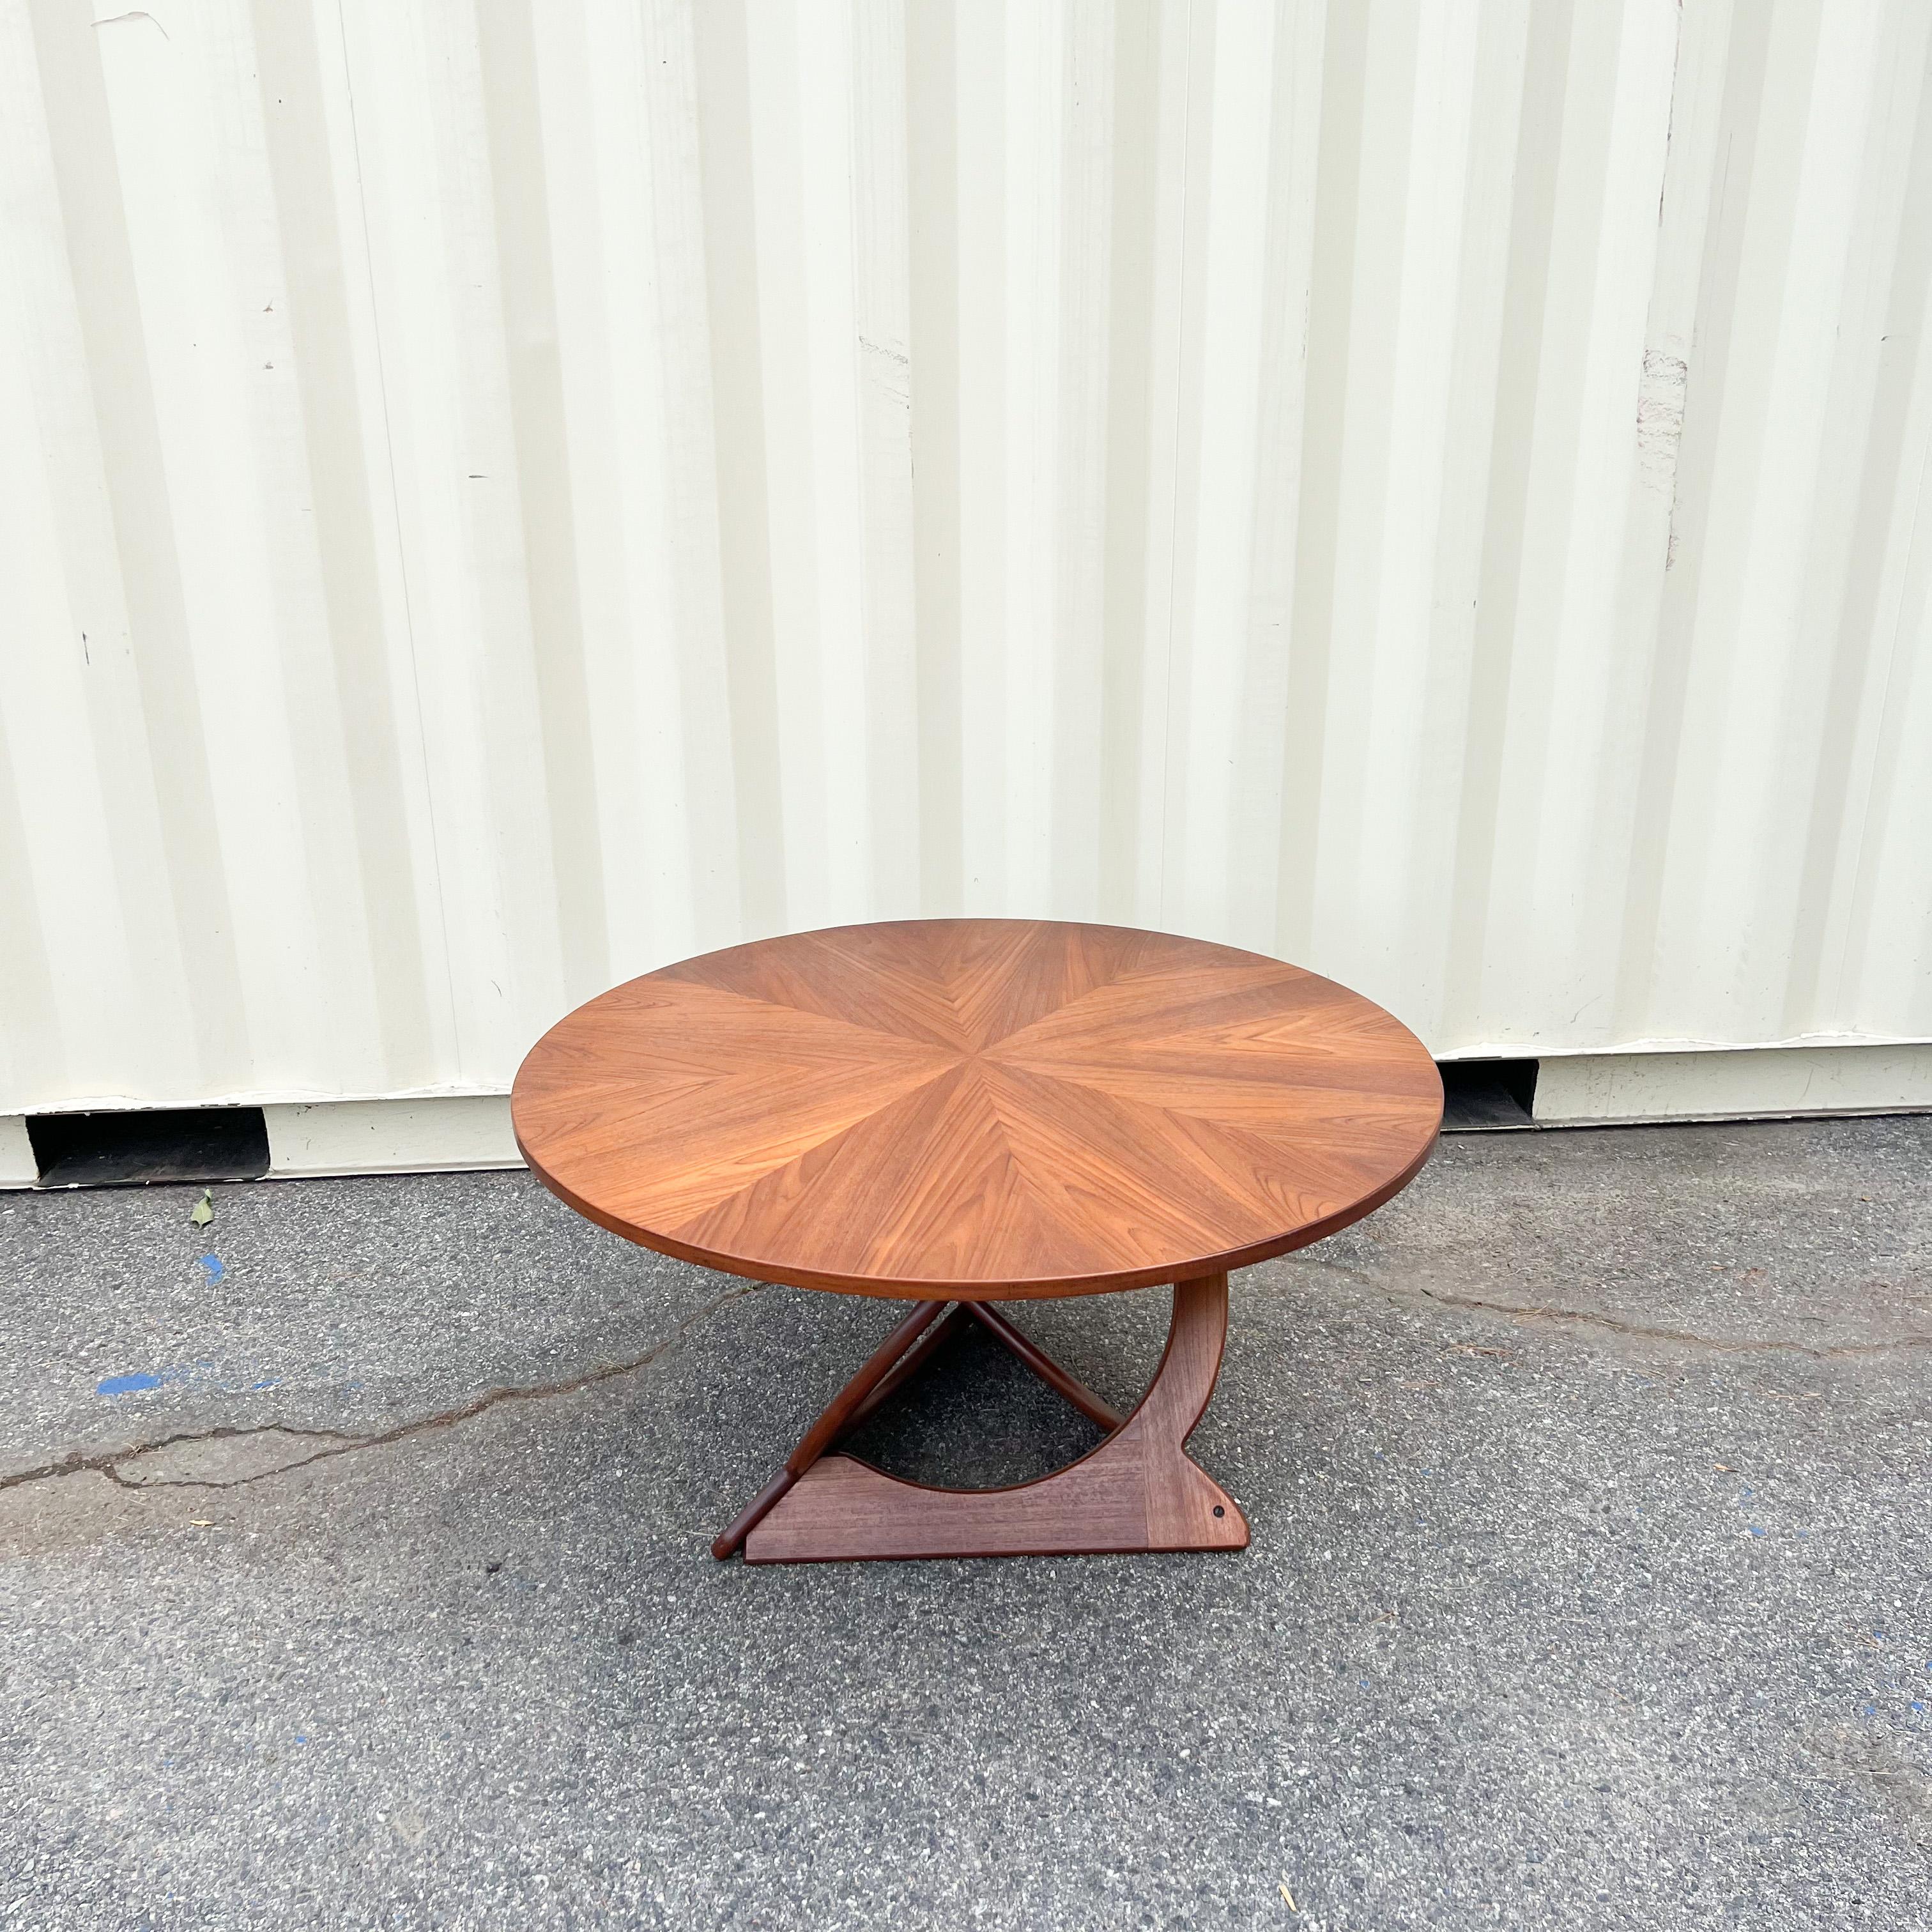 Stunning sculptural teak coffee table designed by Soren Georg Jensen for Kubus.